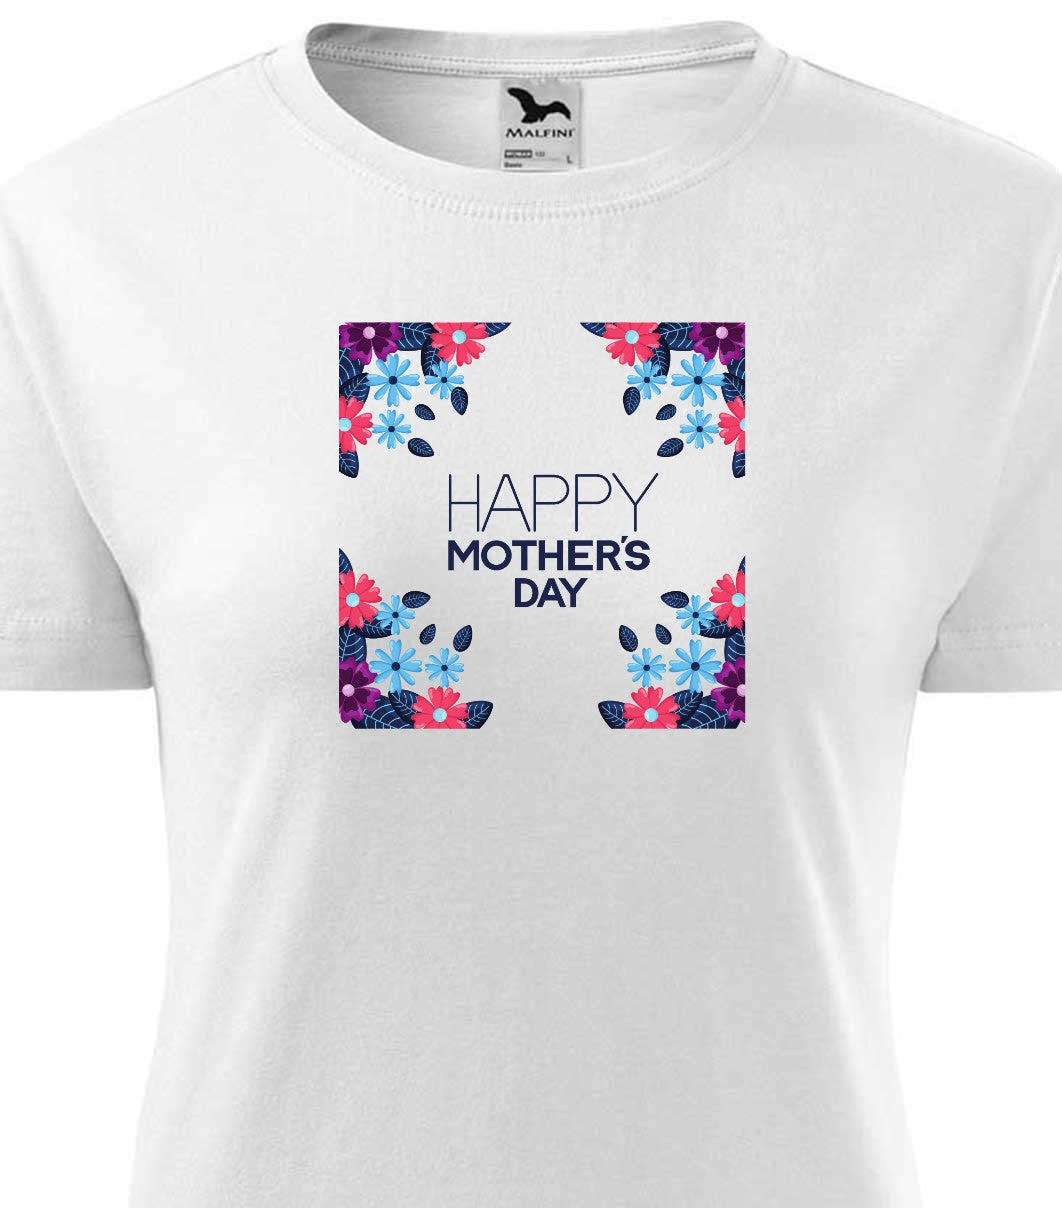 Happy Mothers Day női technikai póló